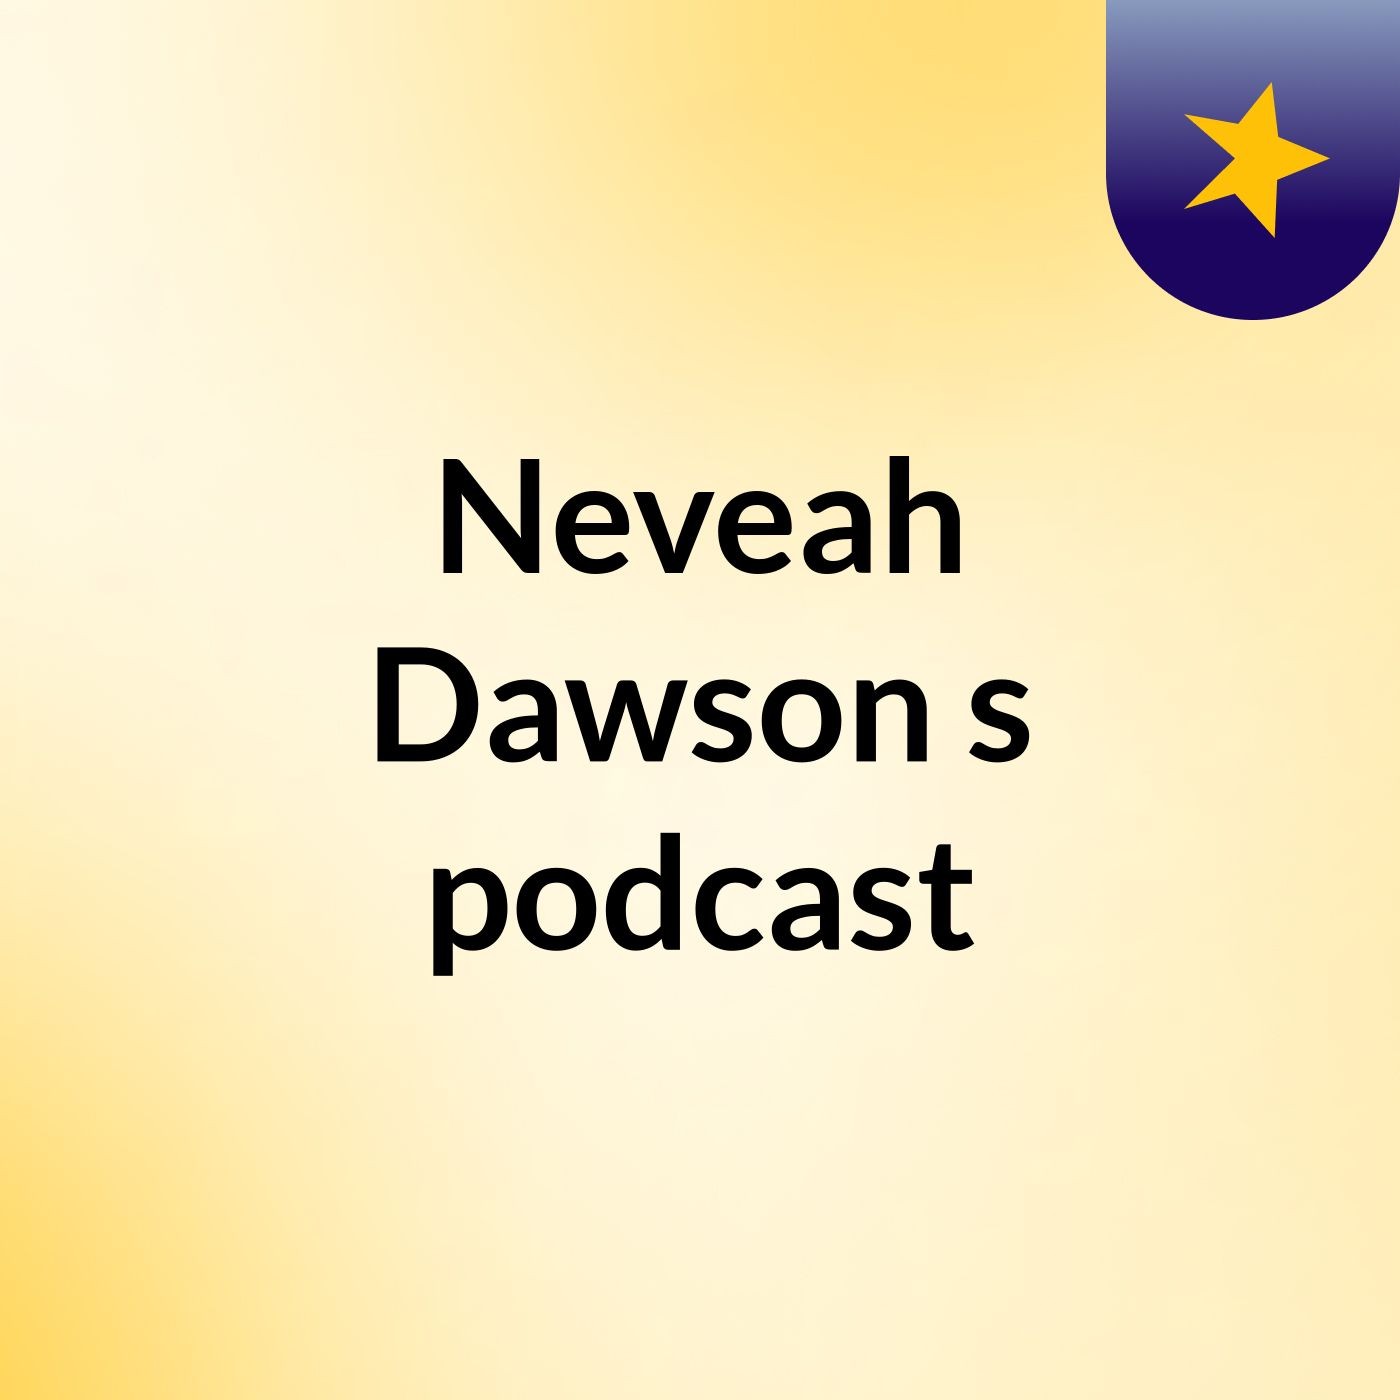 Neveah Dawson's podcast